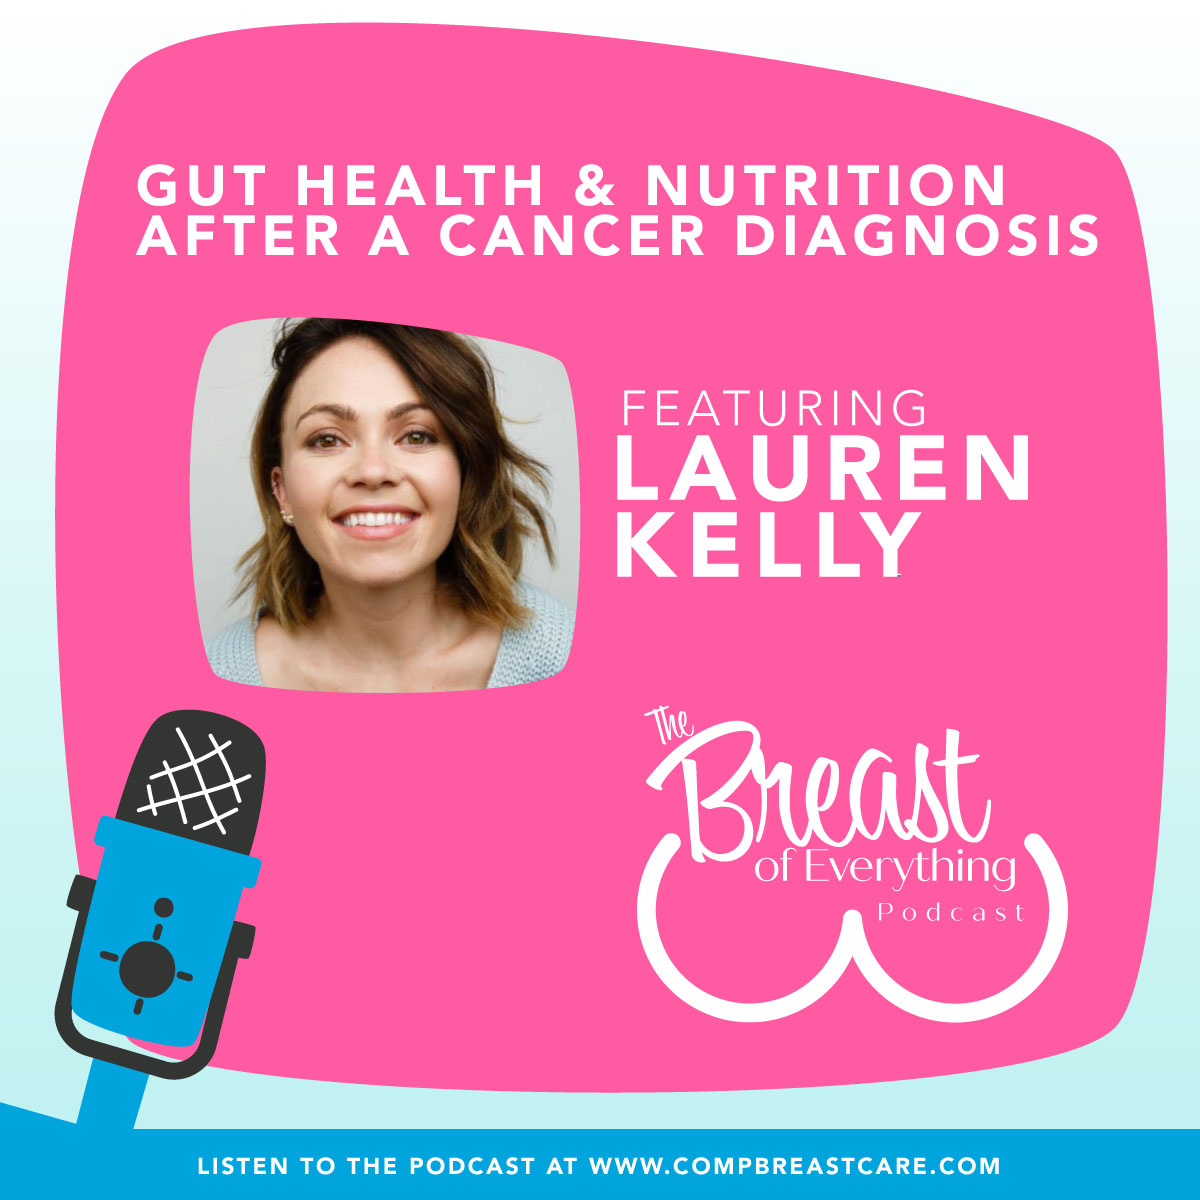 Lauren Kelly on gut health